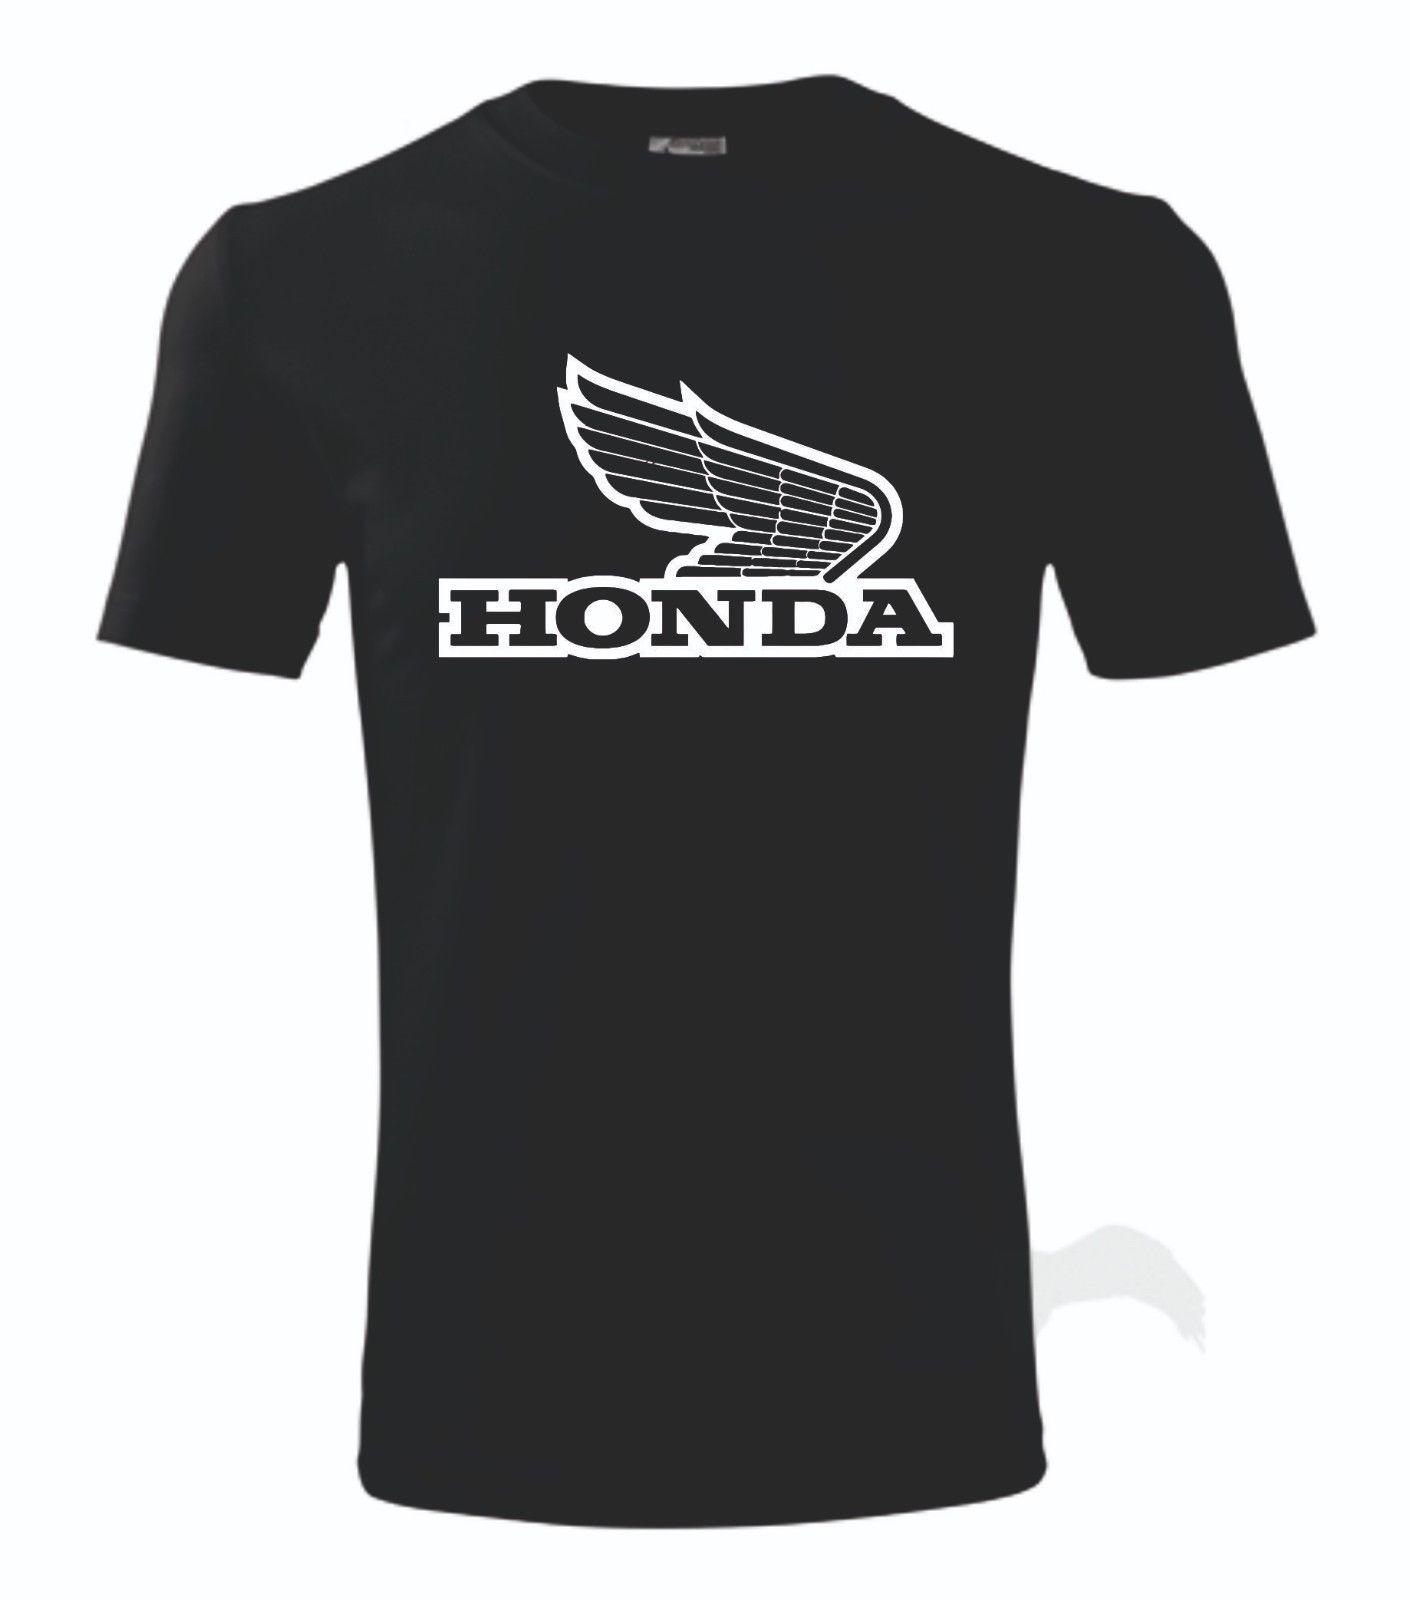 Honda Biker Logo - HONDA CLASSIC VINTAGE LOGO MOTORBIKE BIKER MOTORCYCLE BIKE MEN BOYS